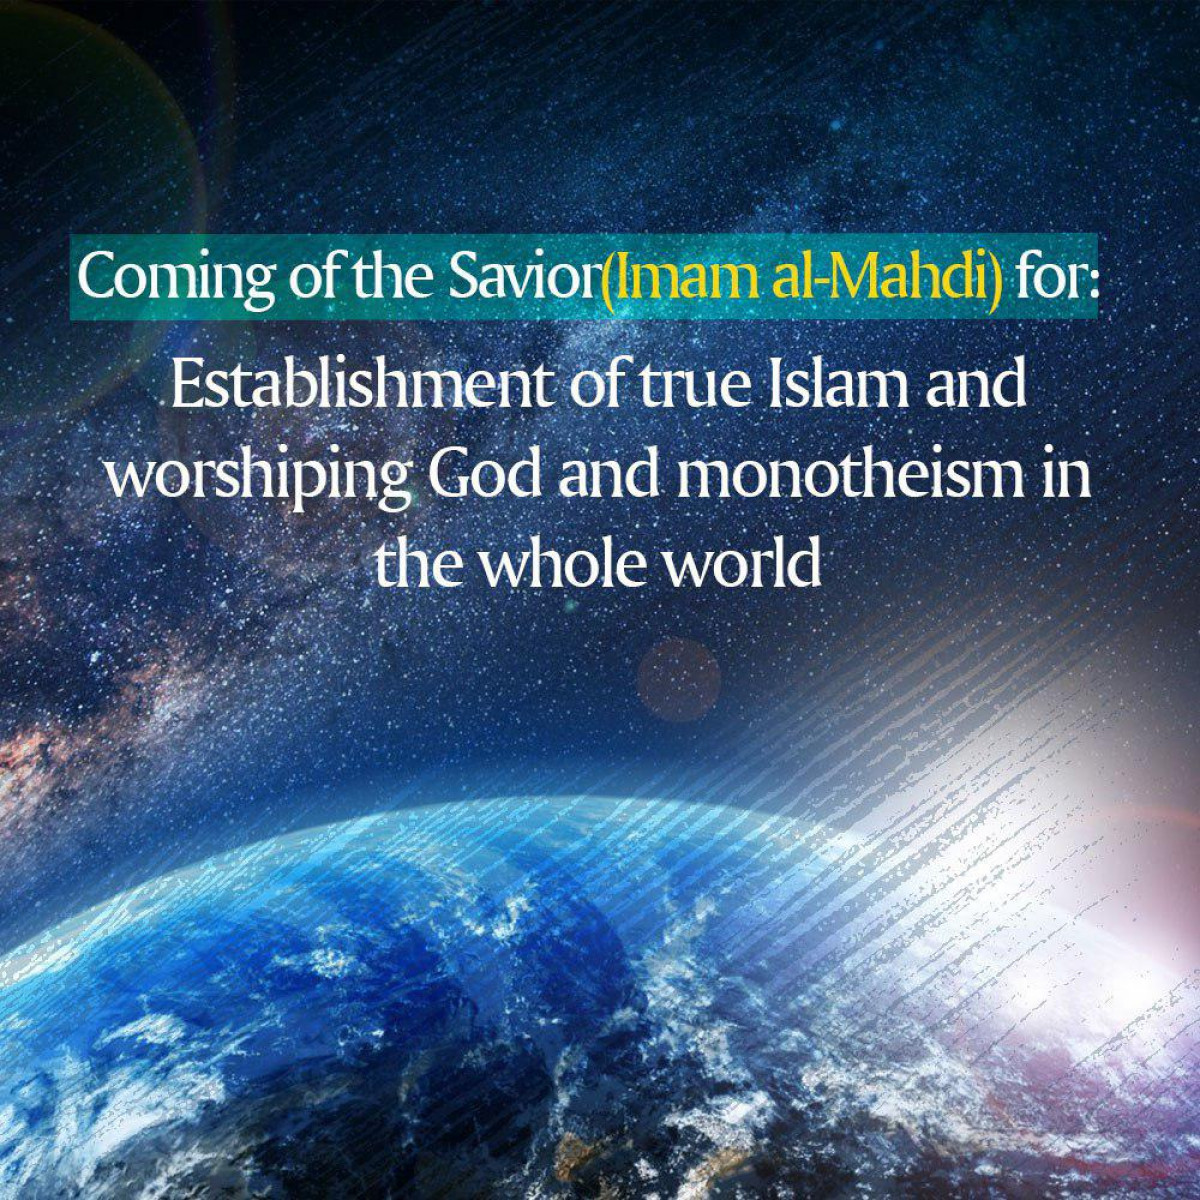 Coming of the Savior (Imam al-Mahdi) for 3